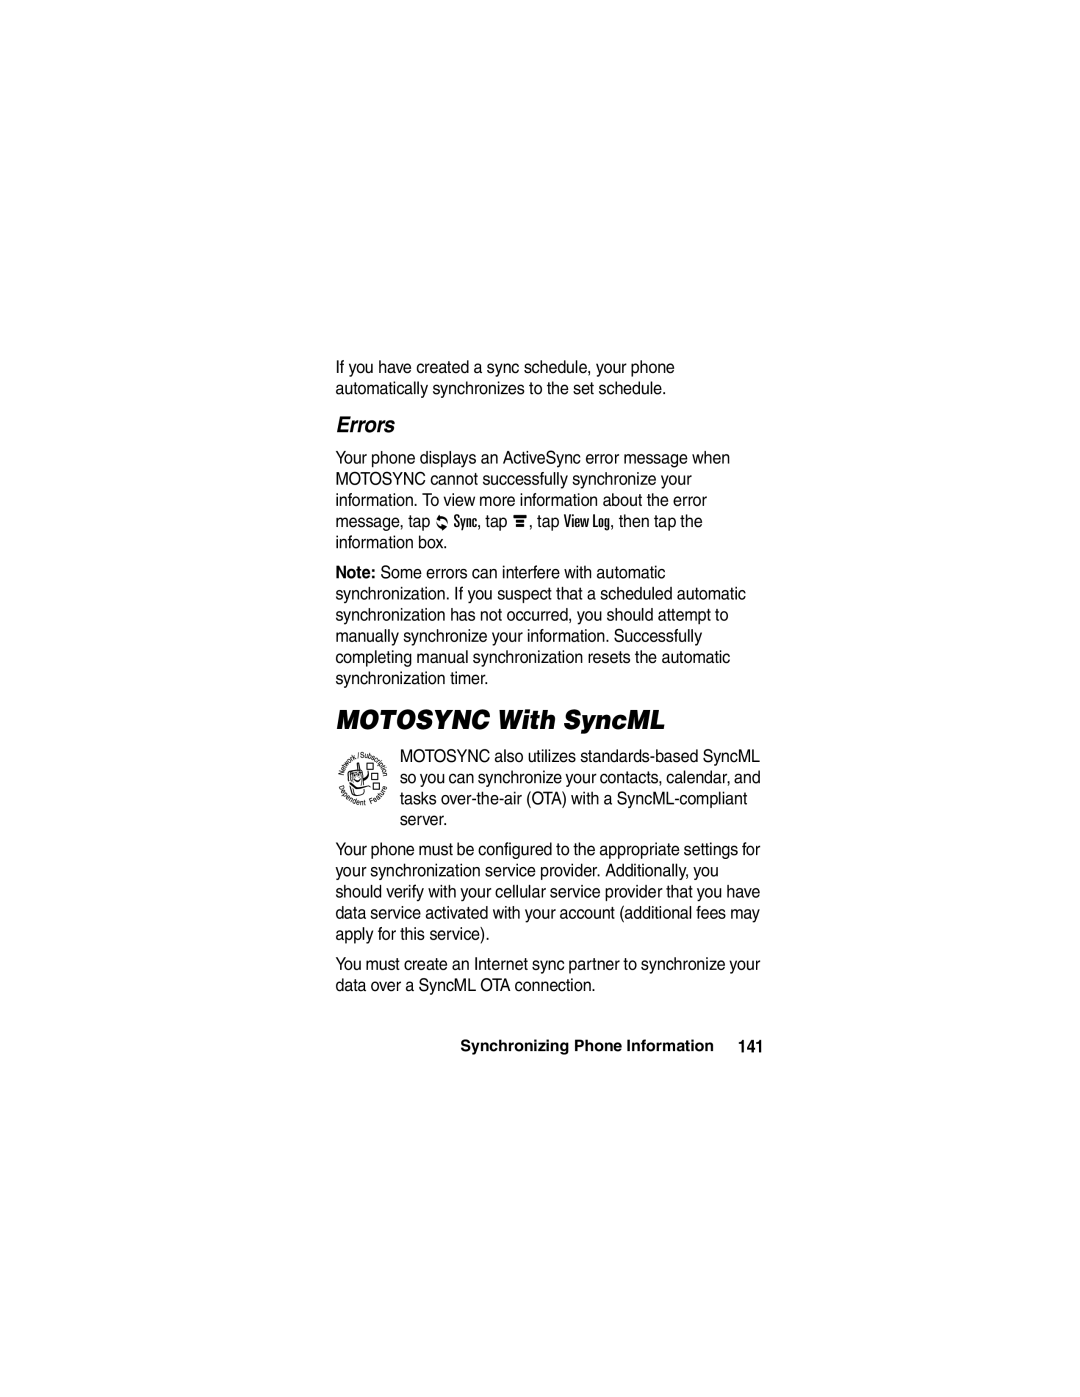 Motorola A780 manual MOTOSYNC With SyncML, Errors 